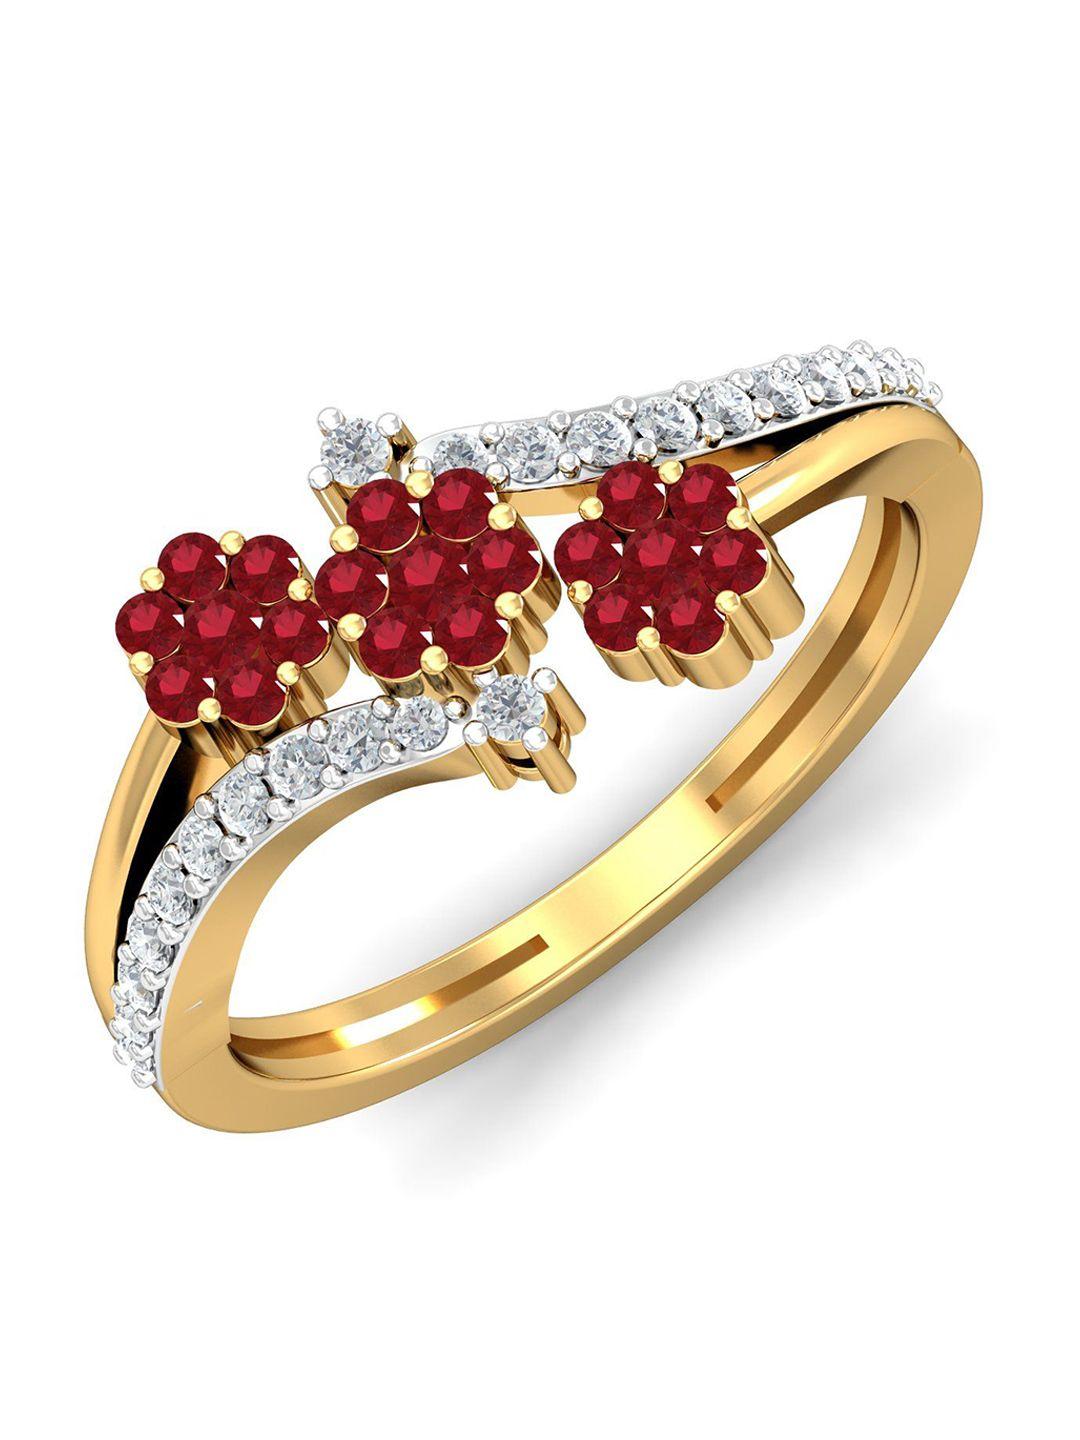 kuberbox-de-fte-18kt-gold-diamond-studded-ring--4.22-gm